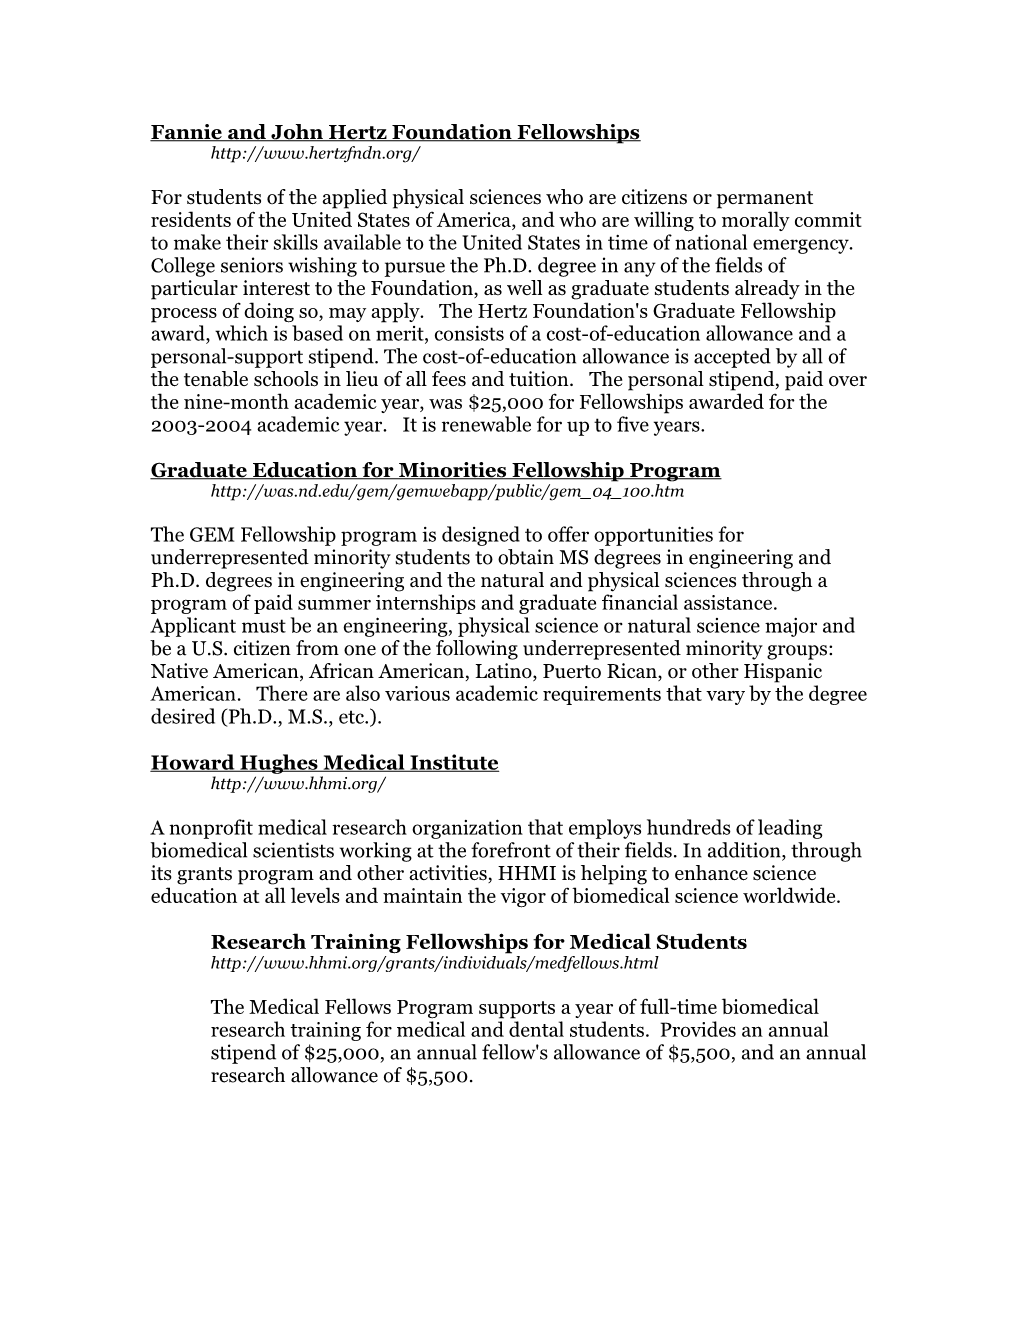 Graduate Education for Minorities Fellowship Program